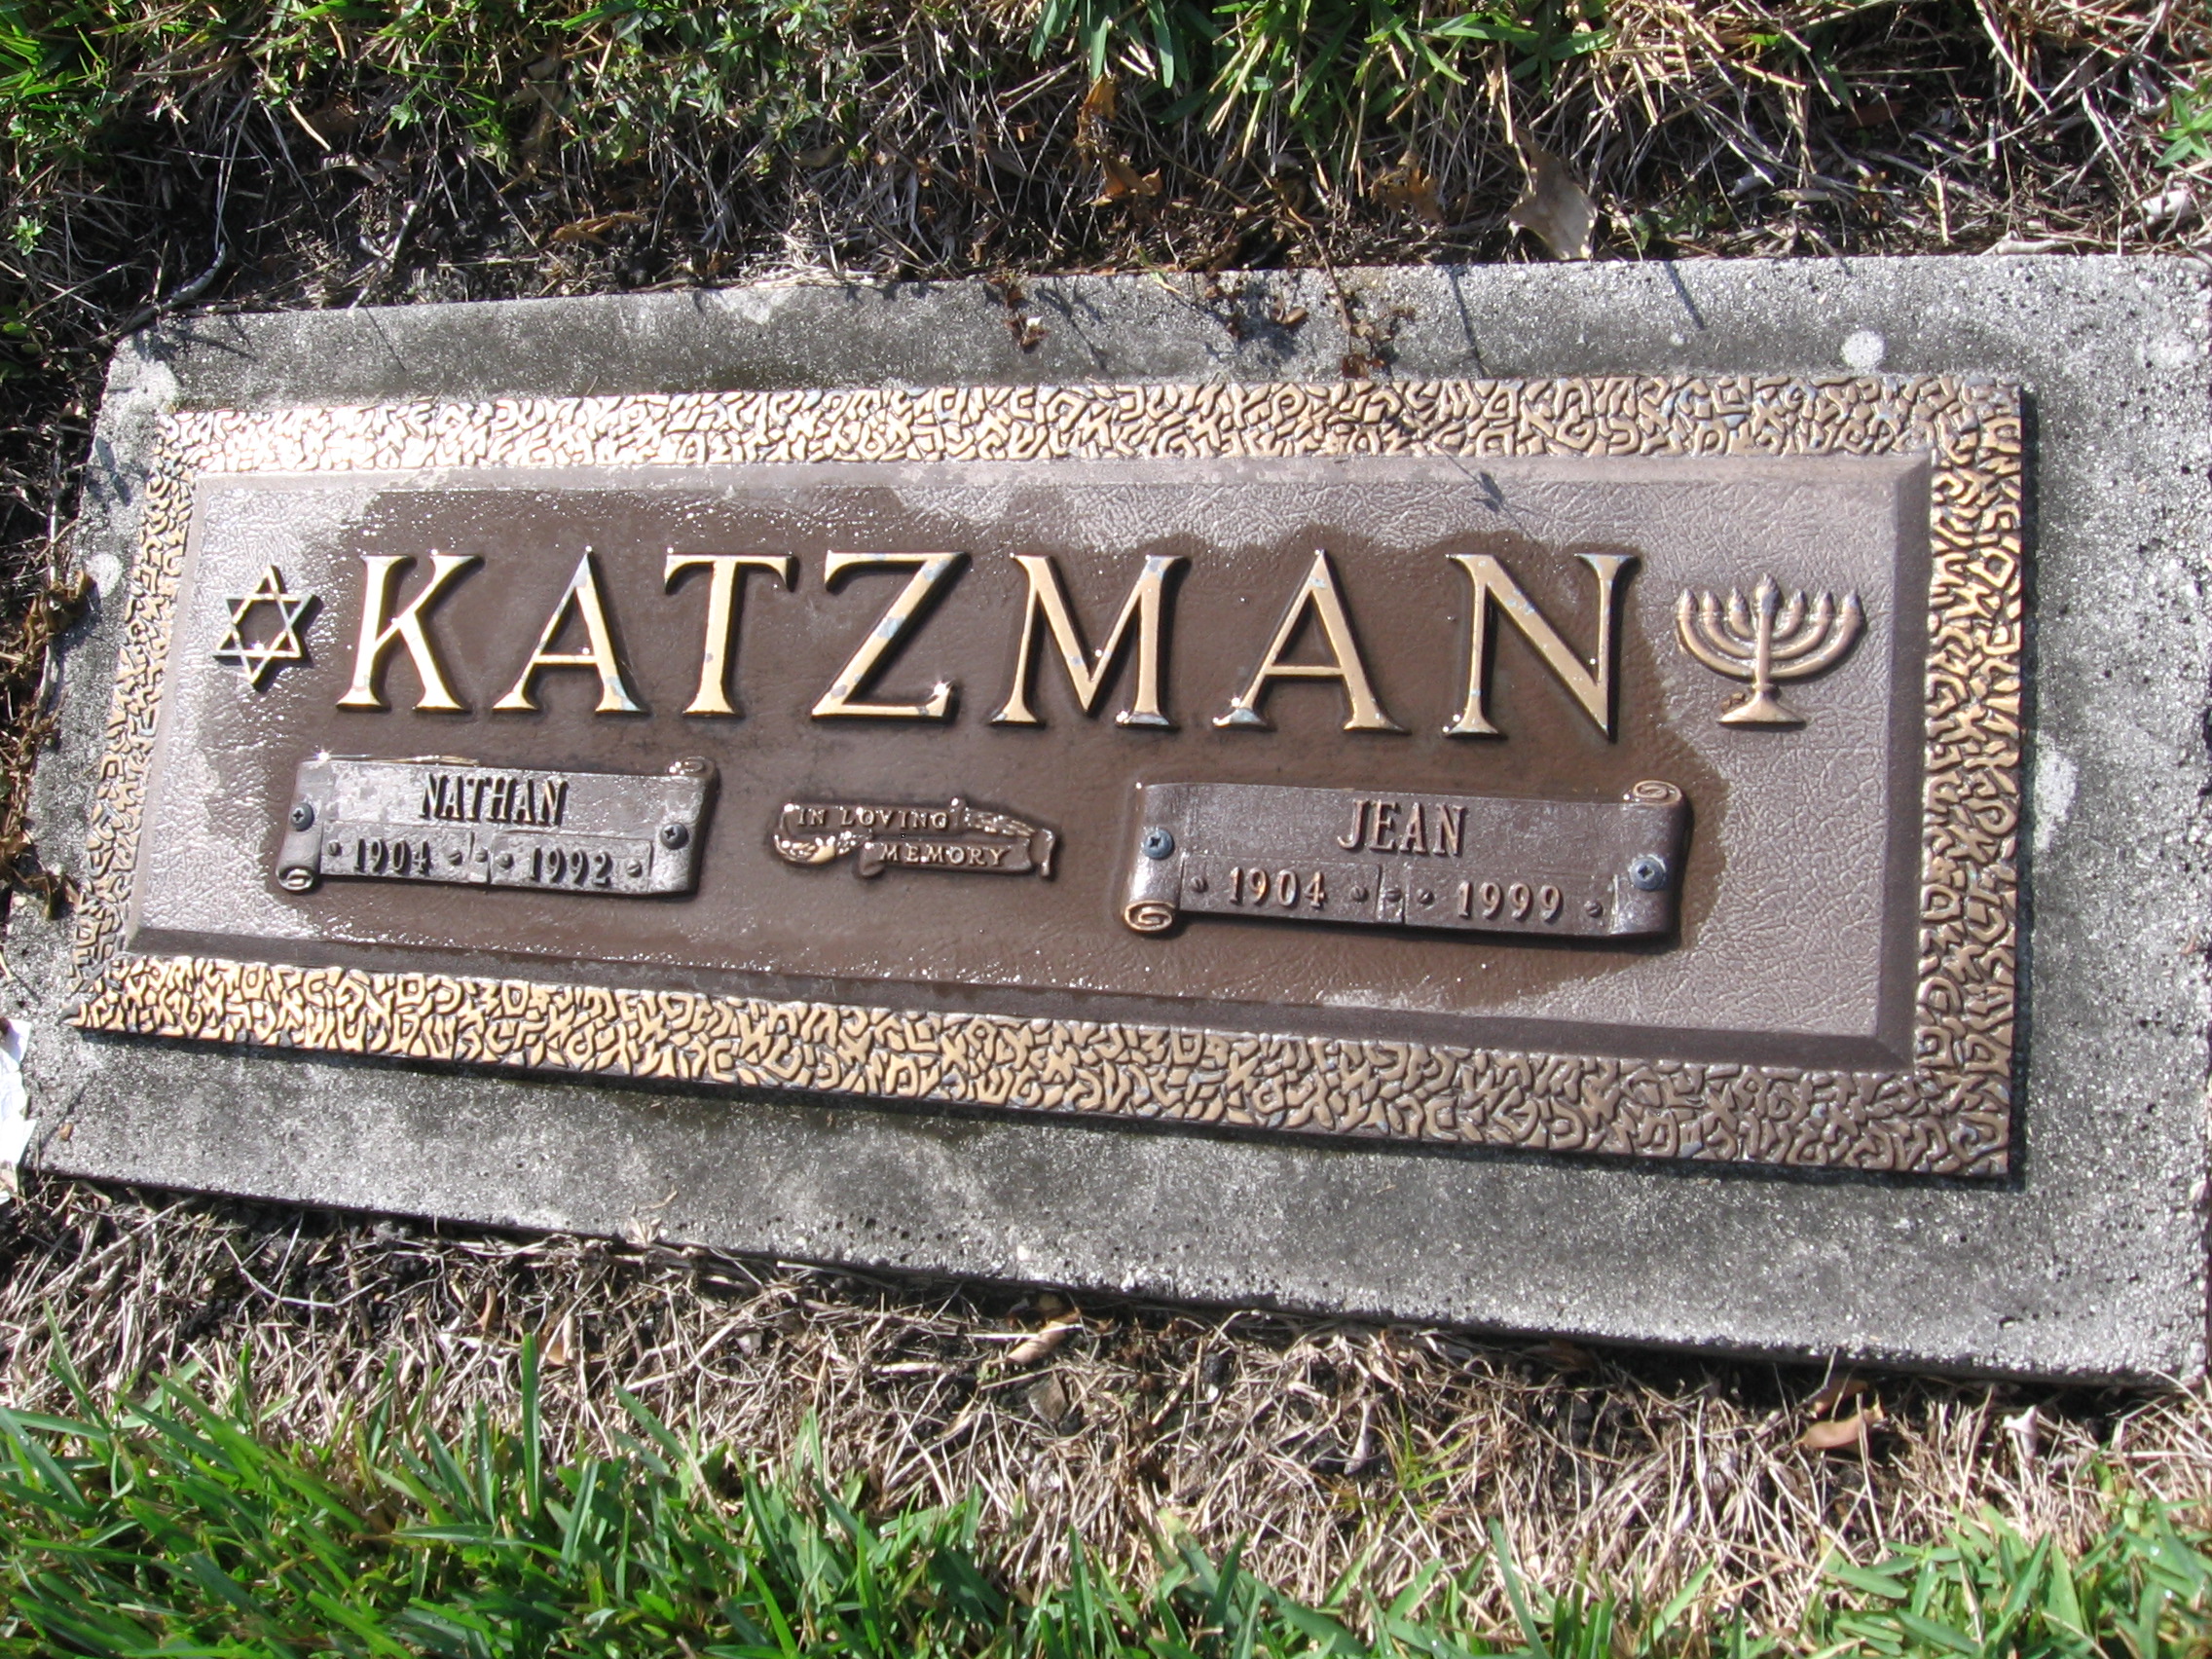 Jean Katzman